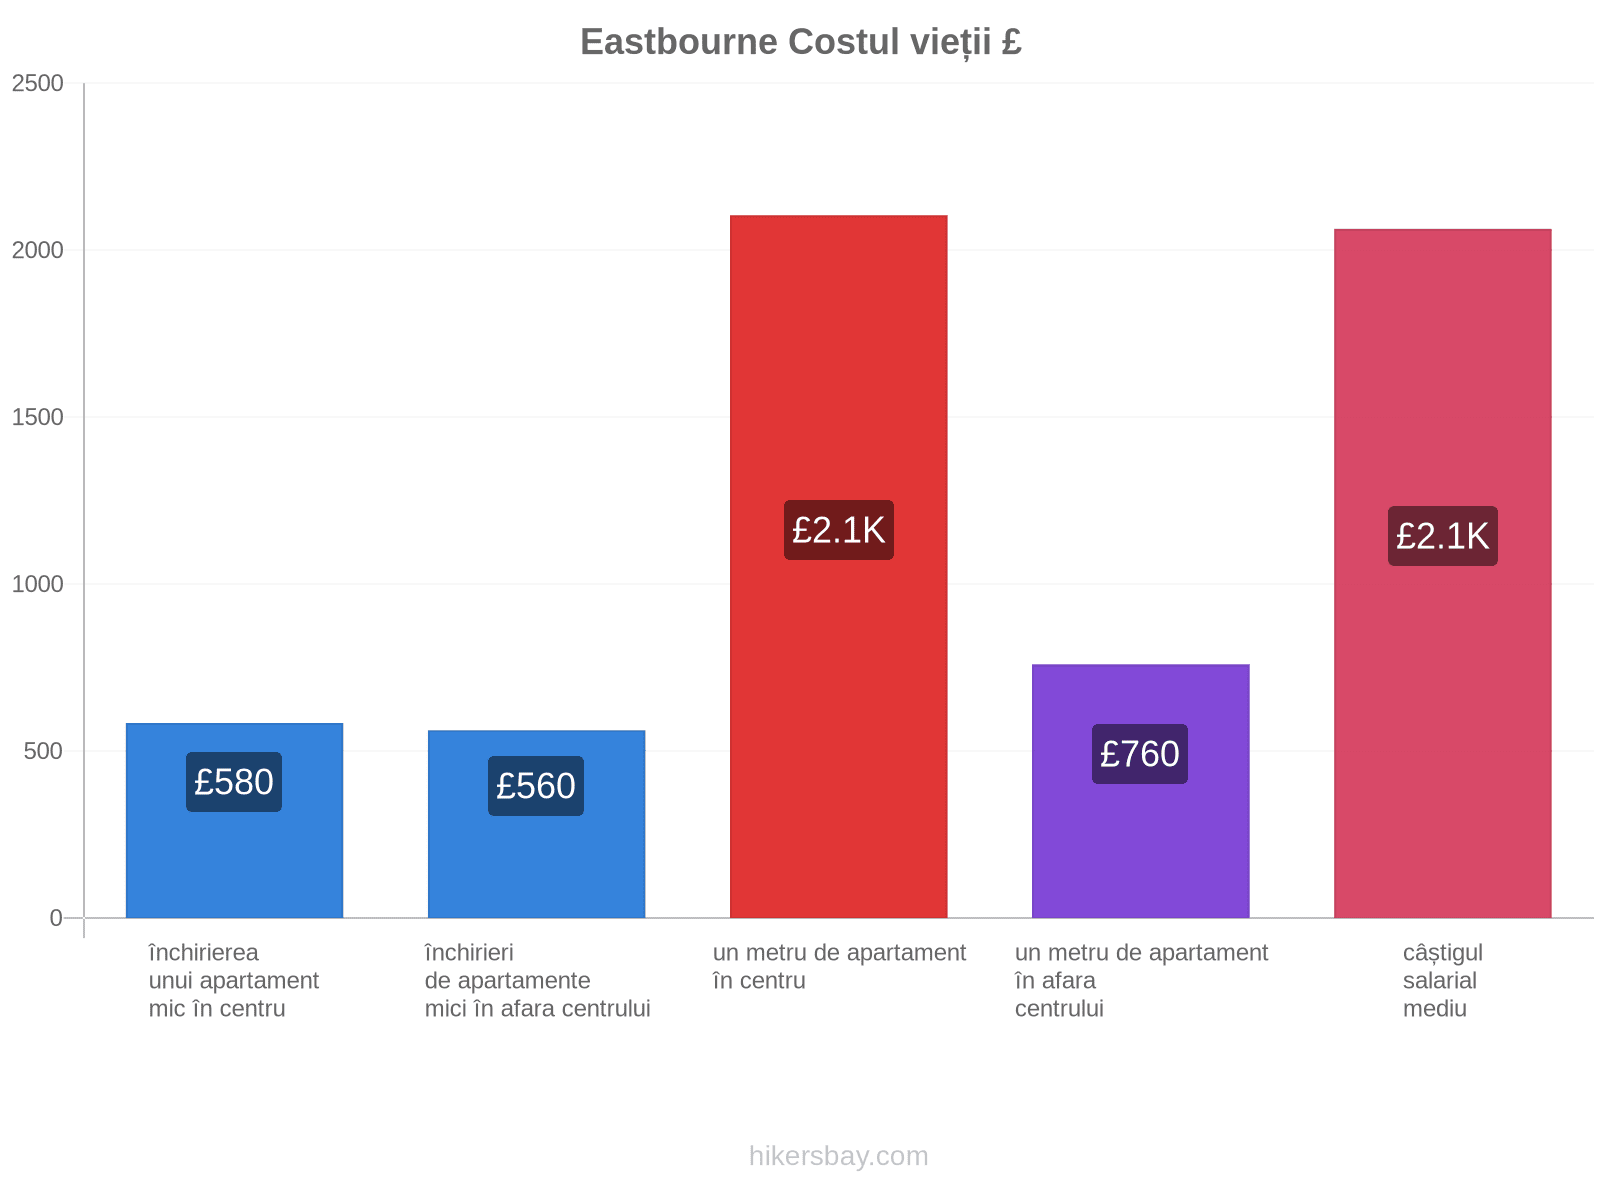 Eastbourne costul vieții hikersbay.com